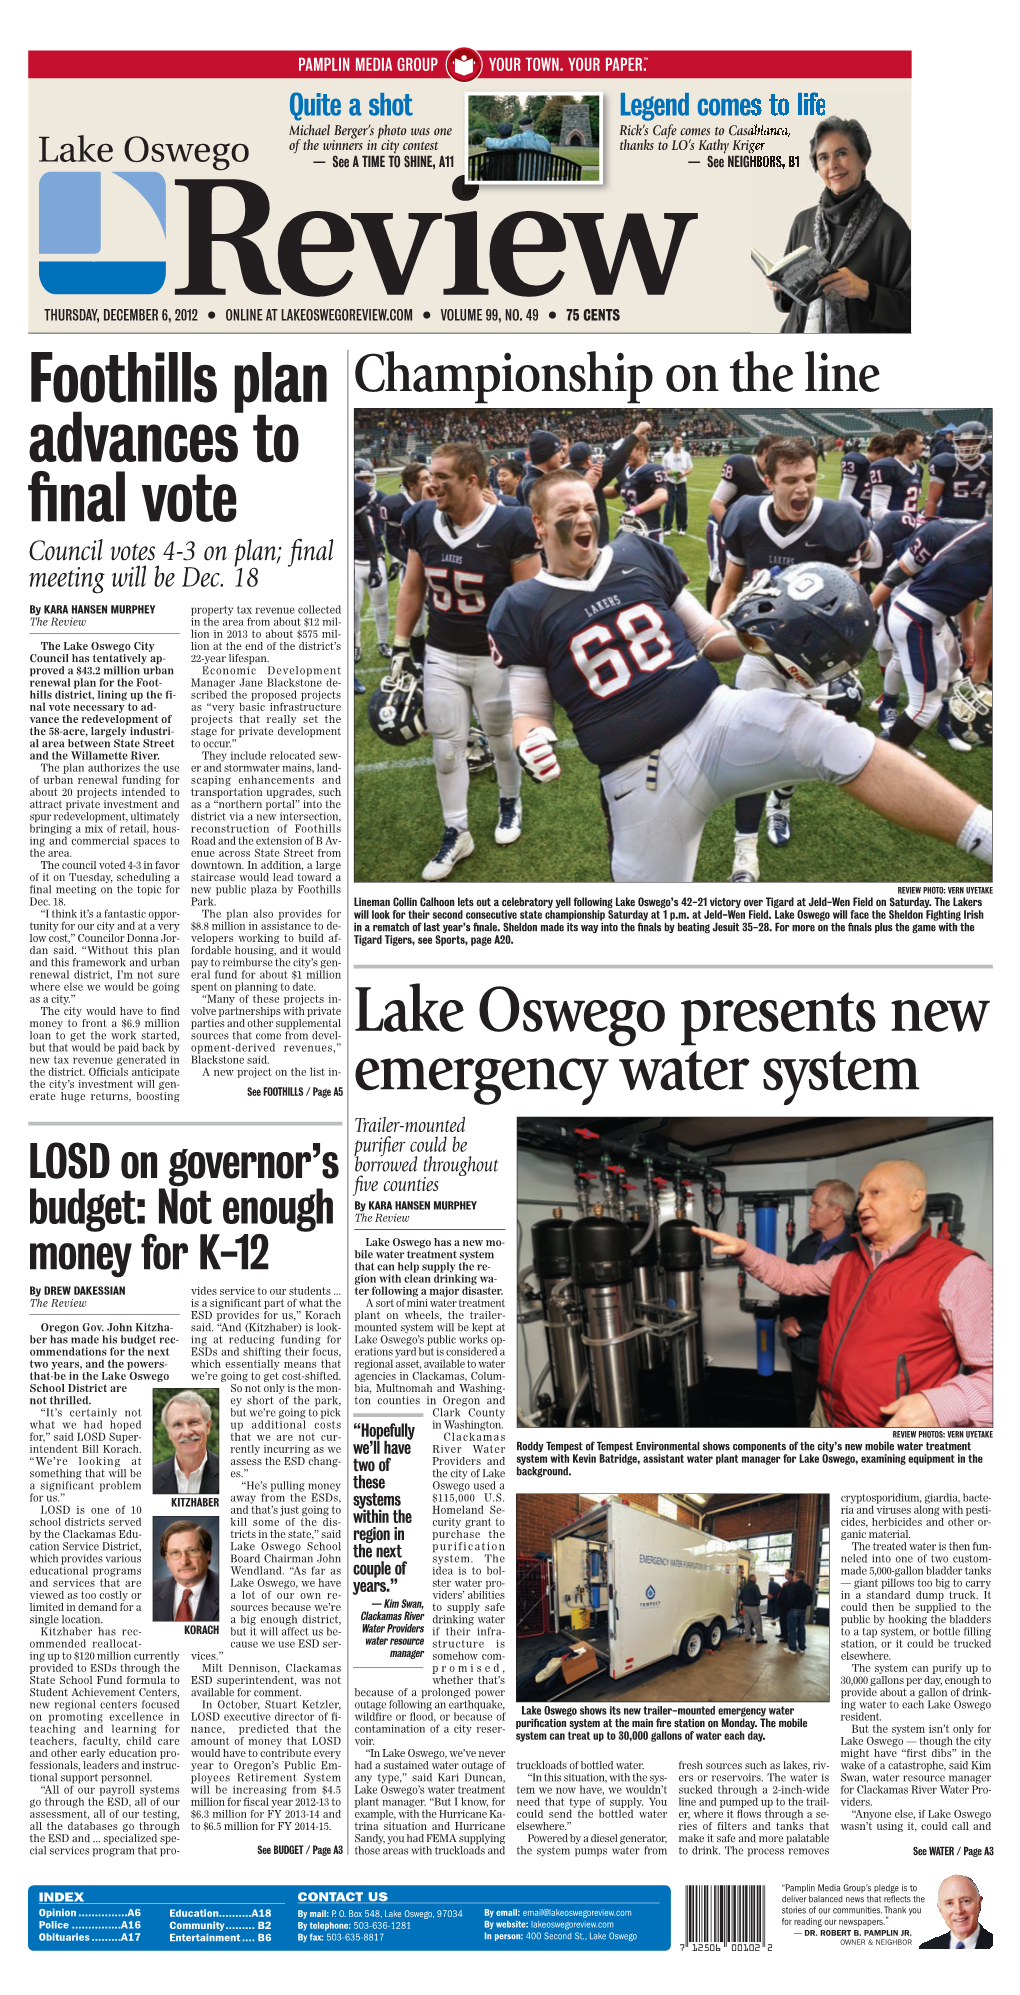 Lake Oswego Presents New Emergency Water System